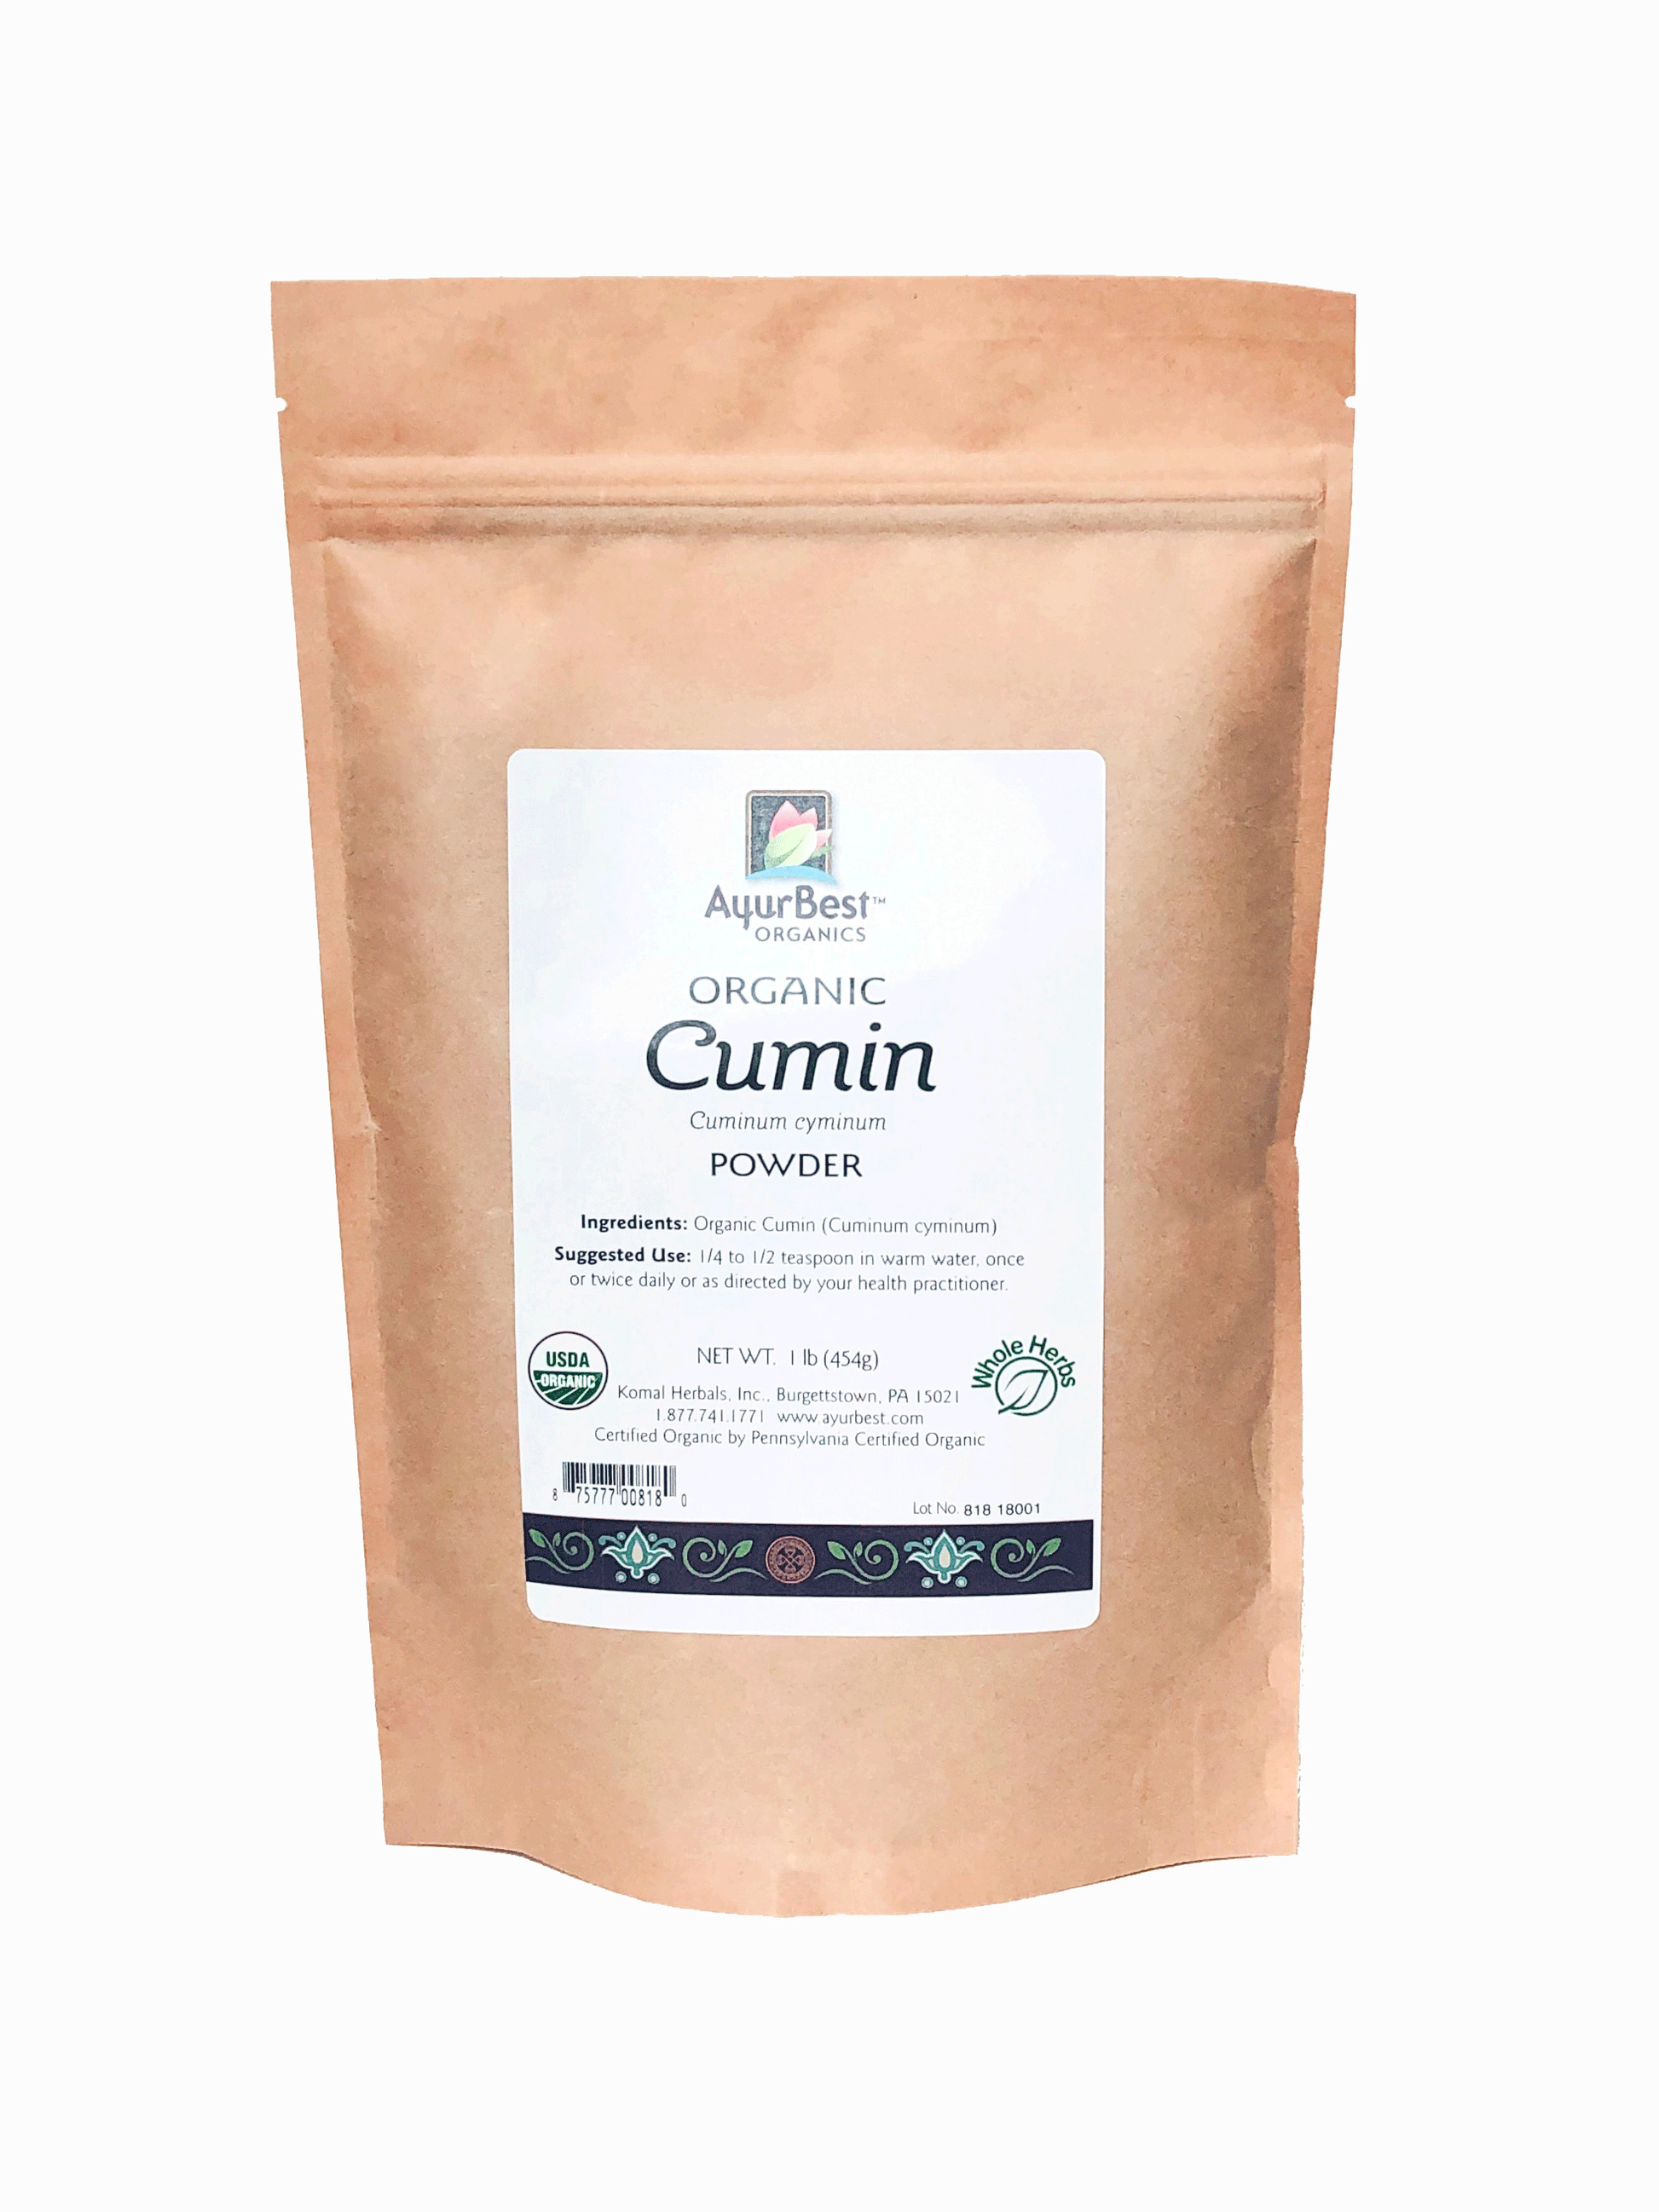 Buy Organic Cumin Seed Powder in 1lb Bulk Size.